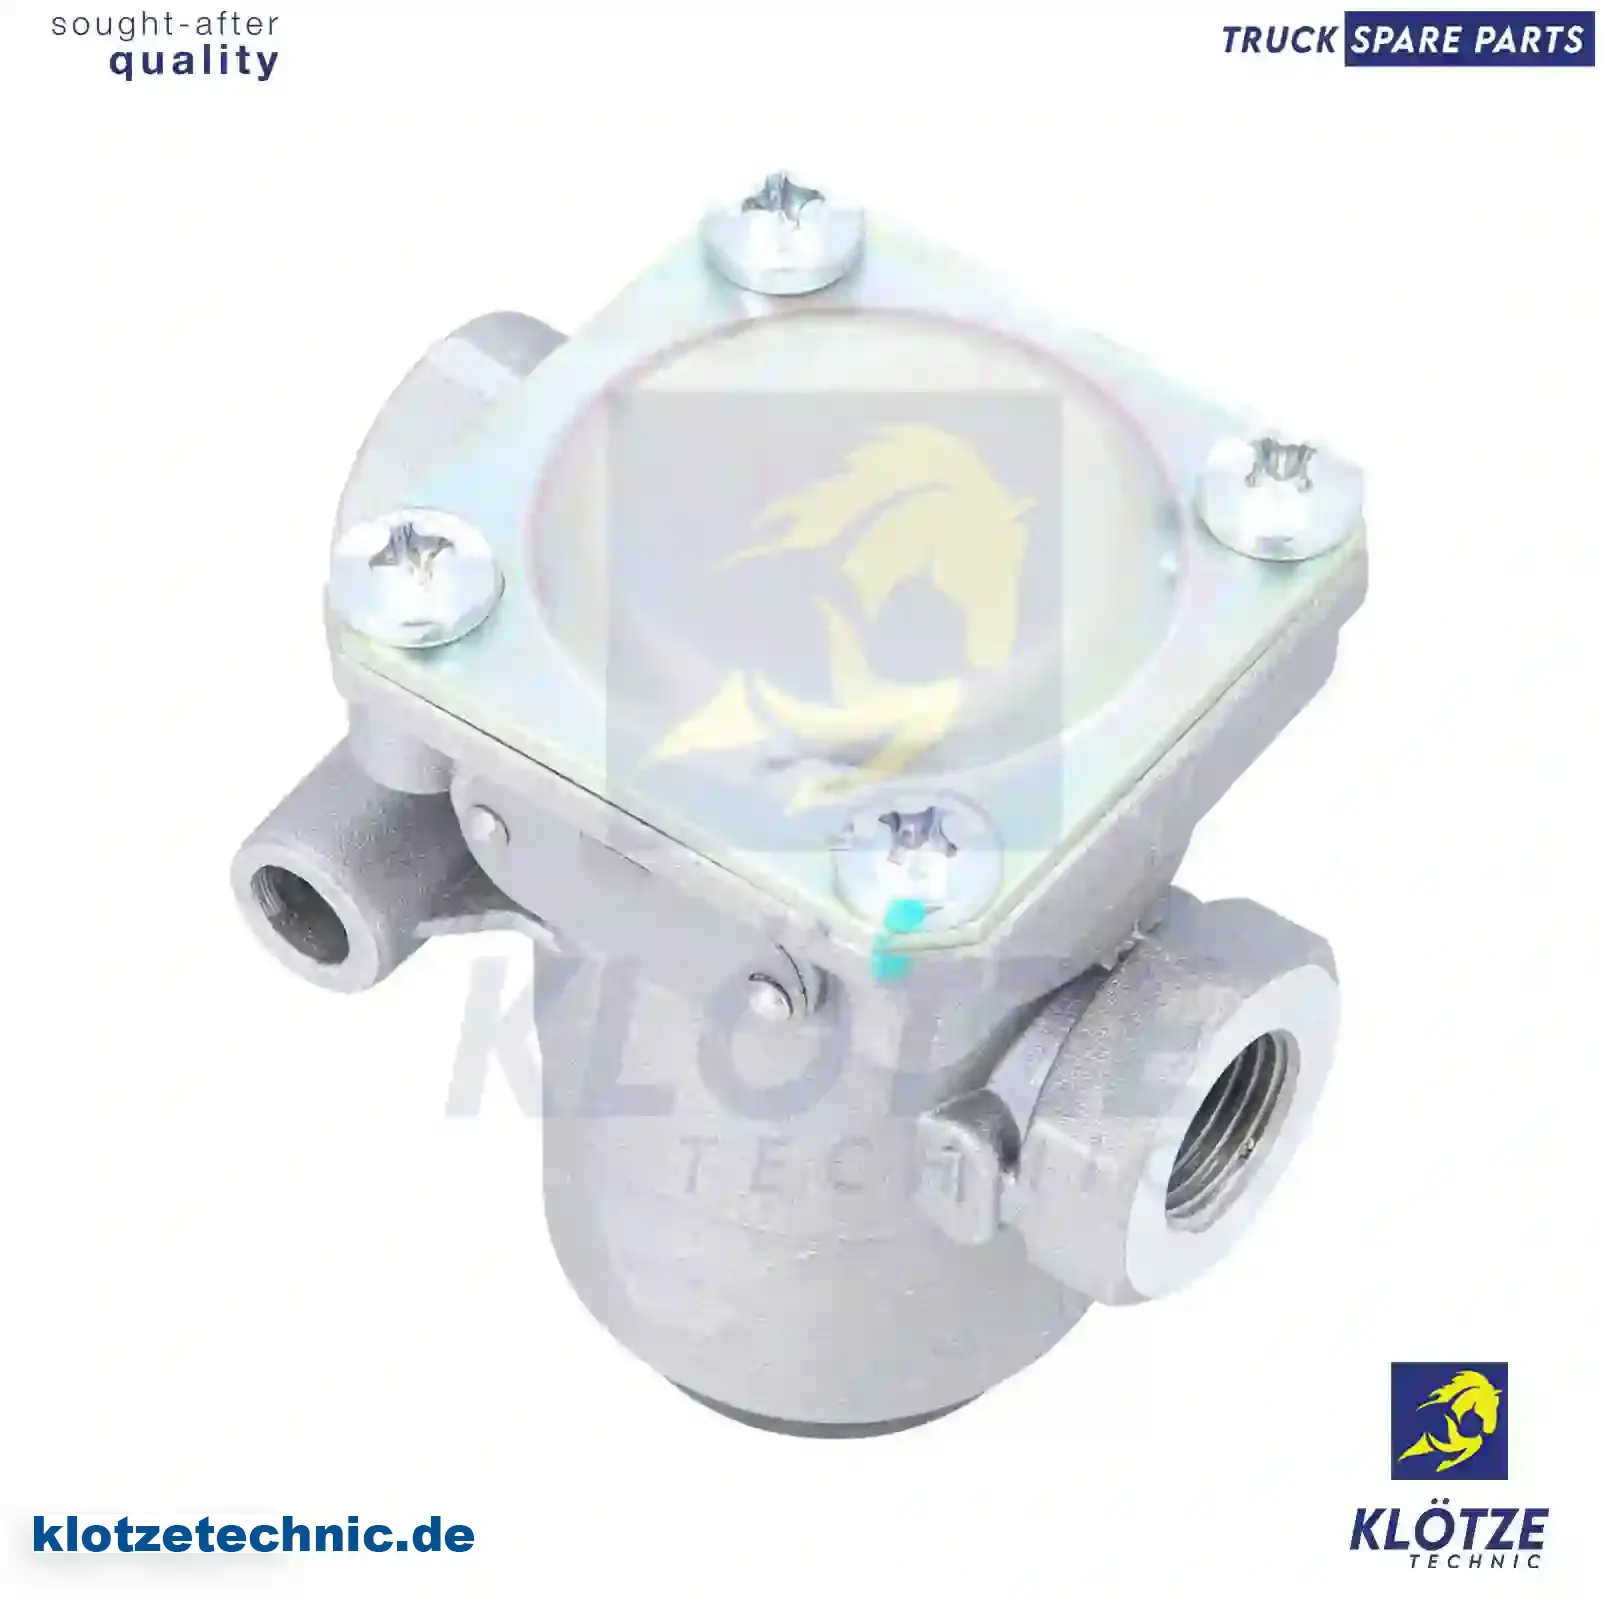 Pressure limiting valve, 1725688 || Klötze Technic